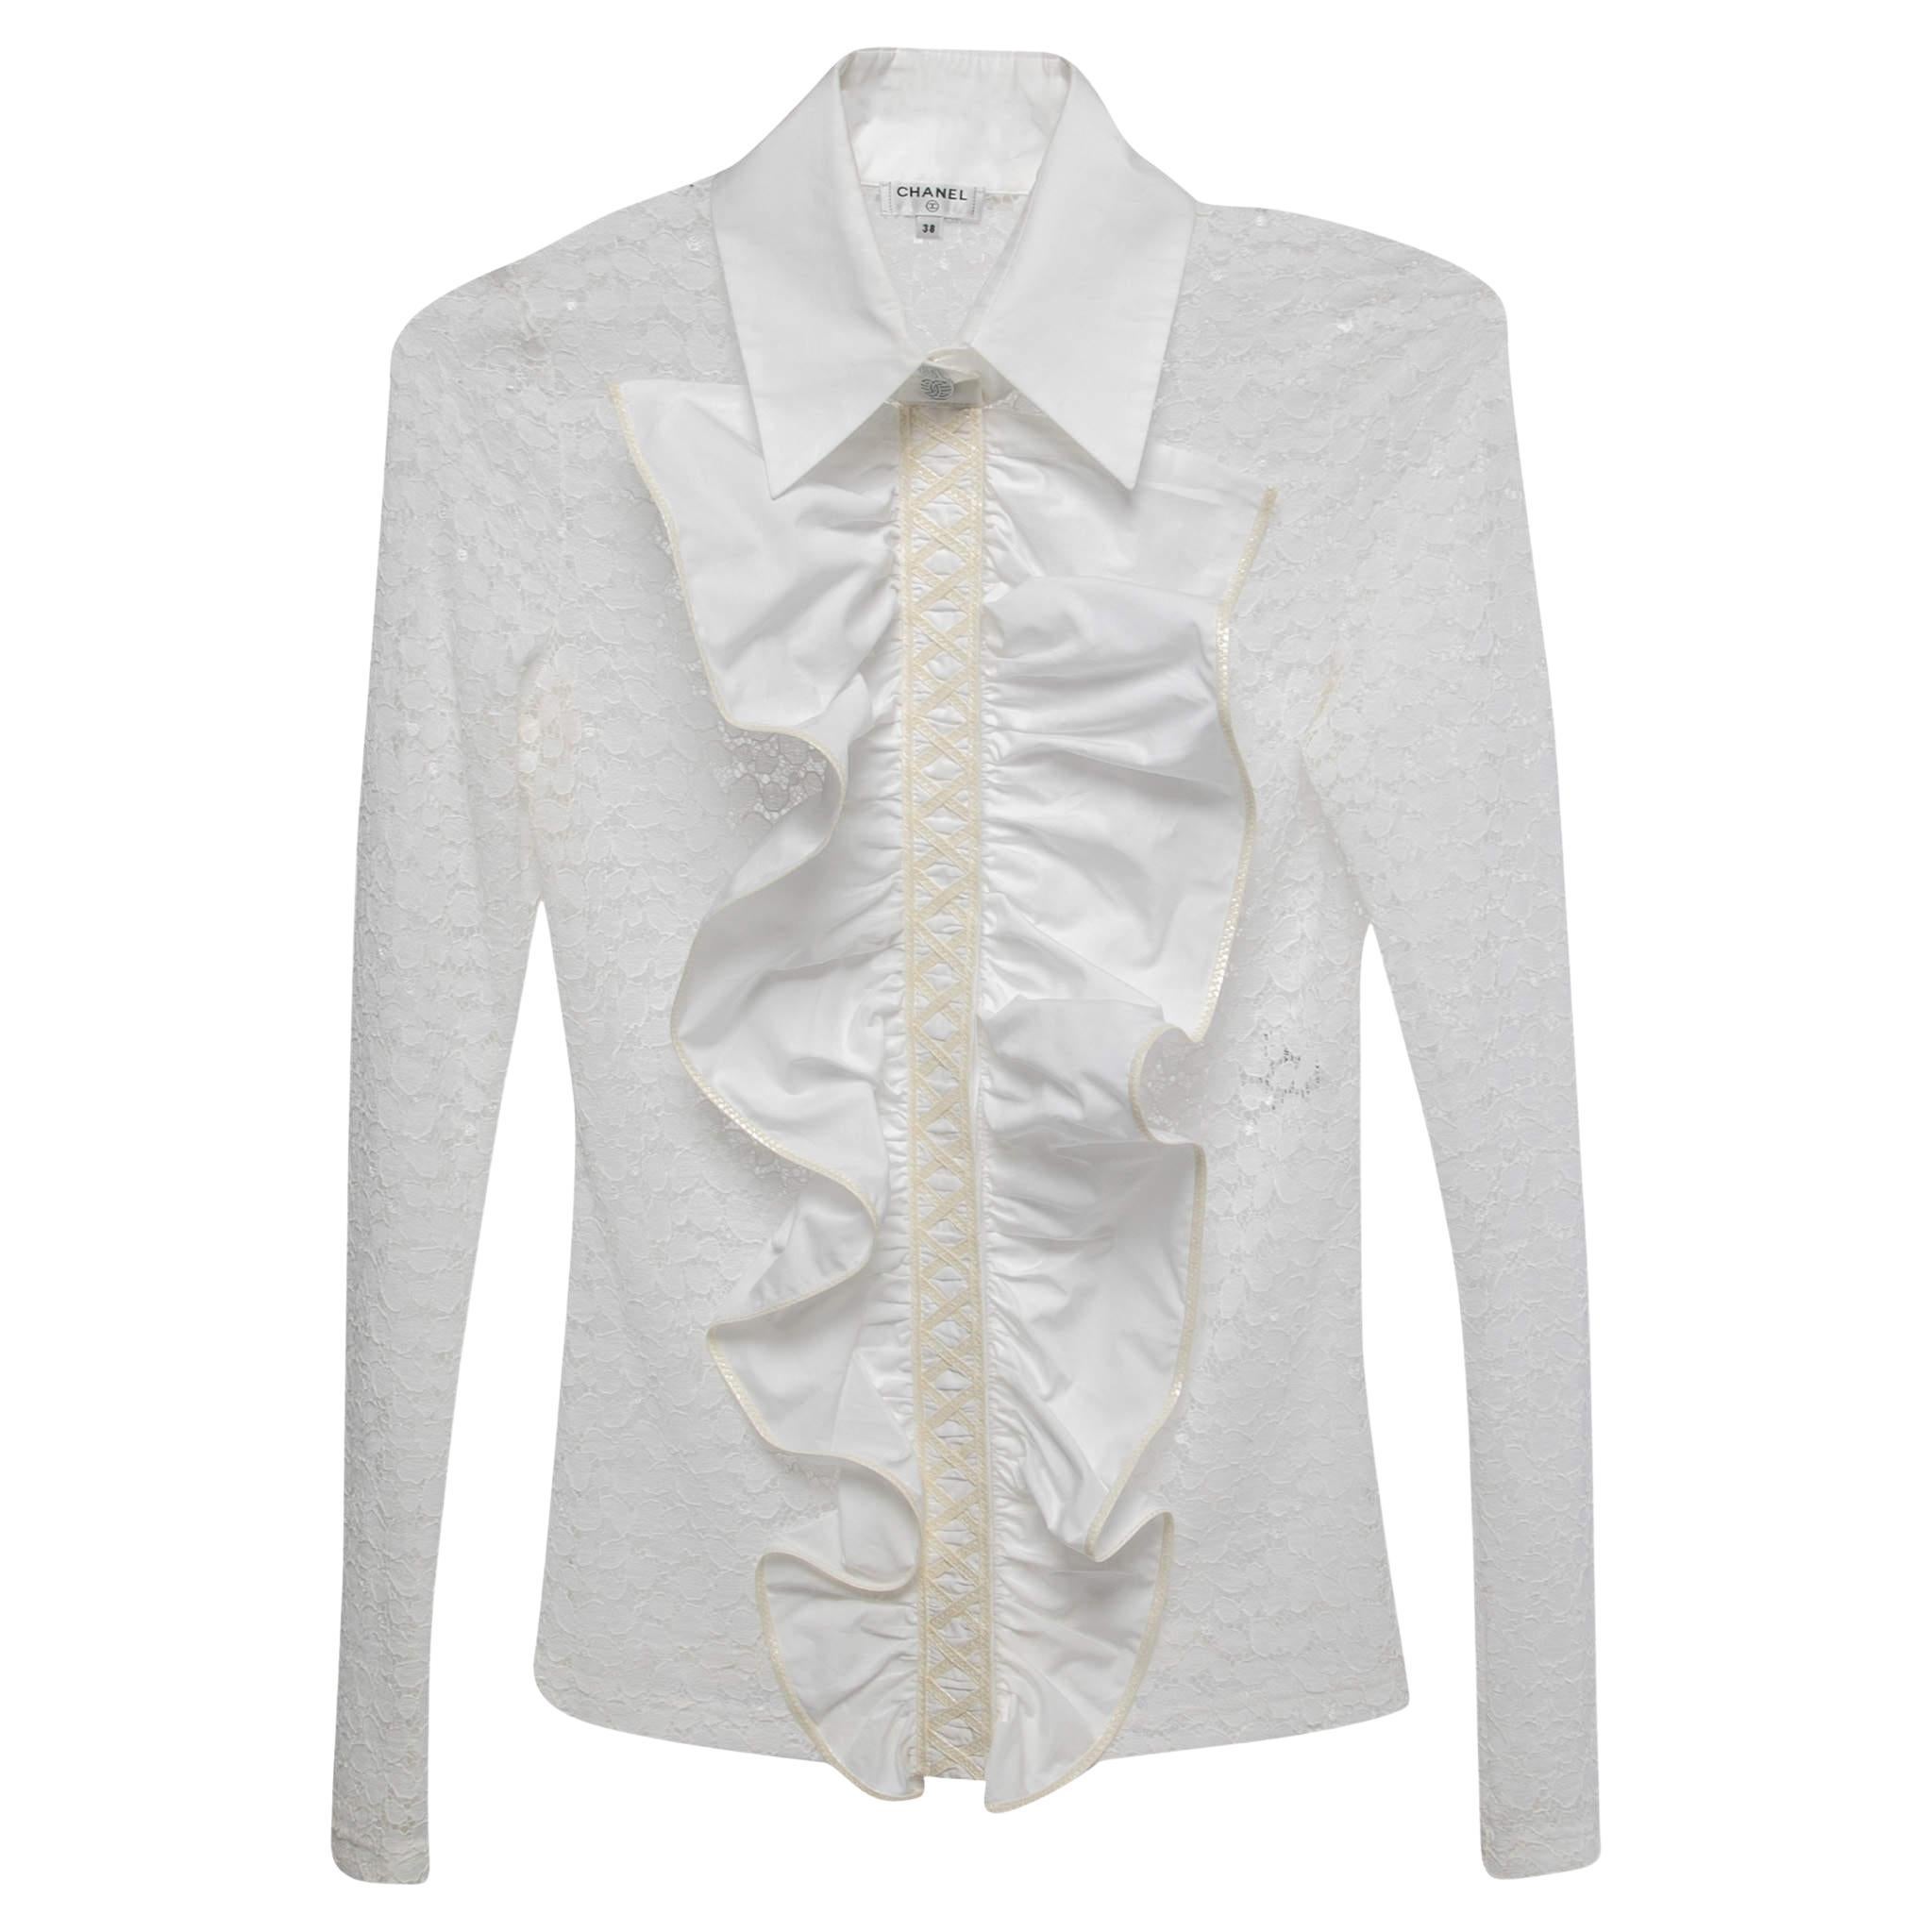 Chanel White Cotton Knit Contrast Detail Polo T-Shirt L Chanel